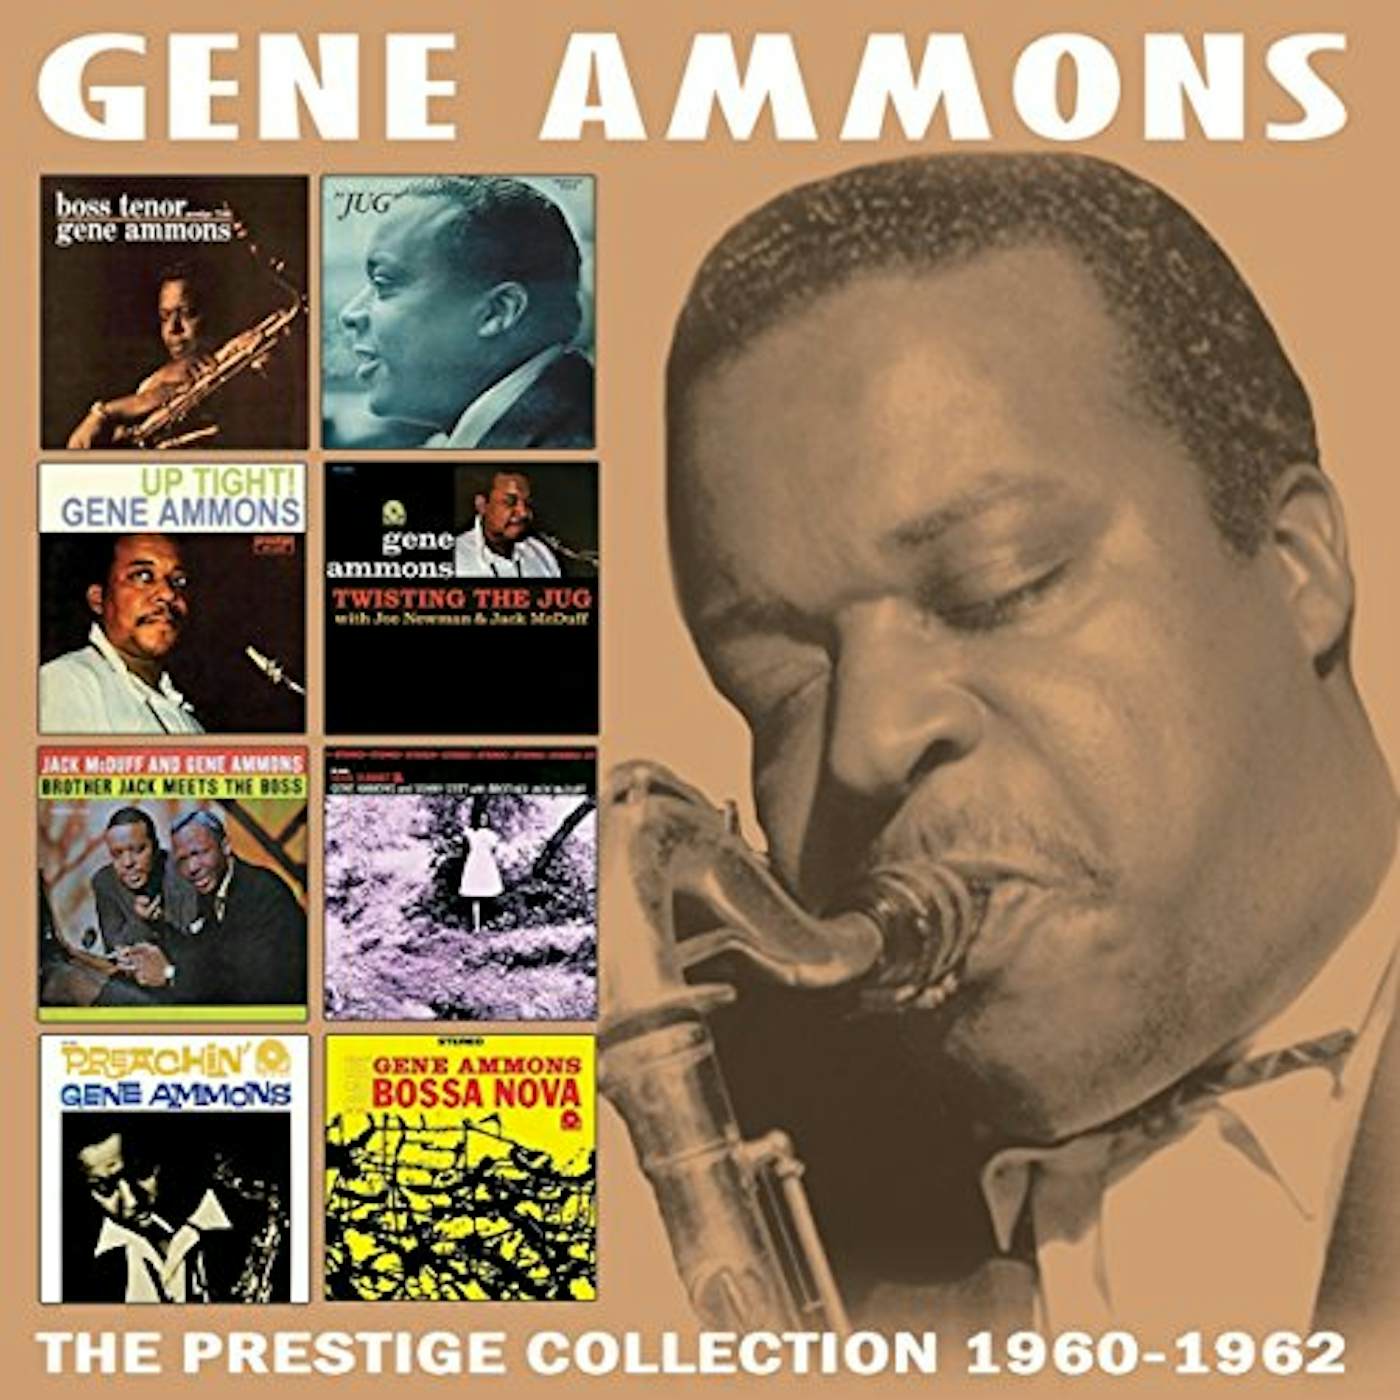 Gene Ammons PRESTIGE COLLECTION: 1960-1962 CD